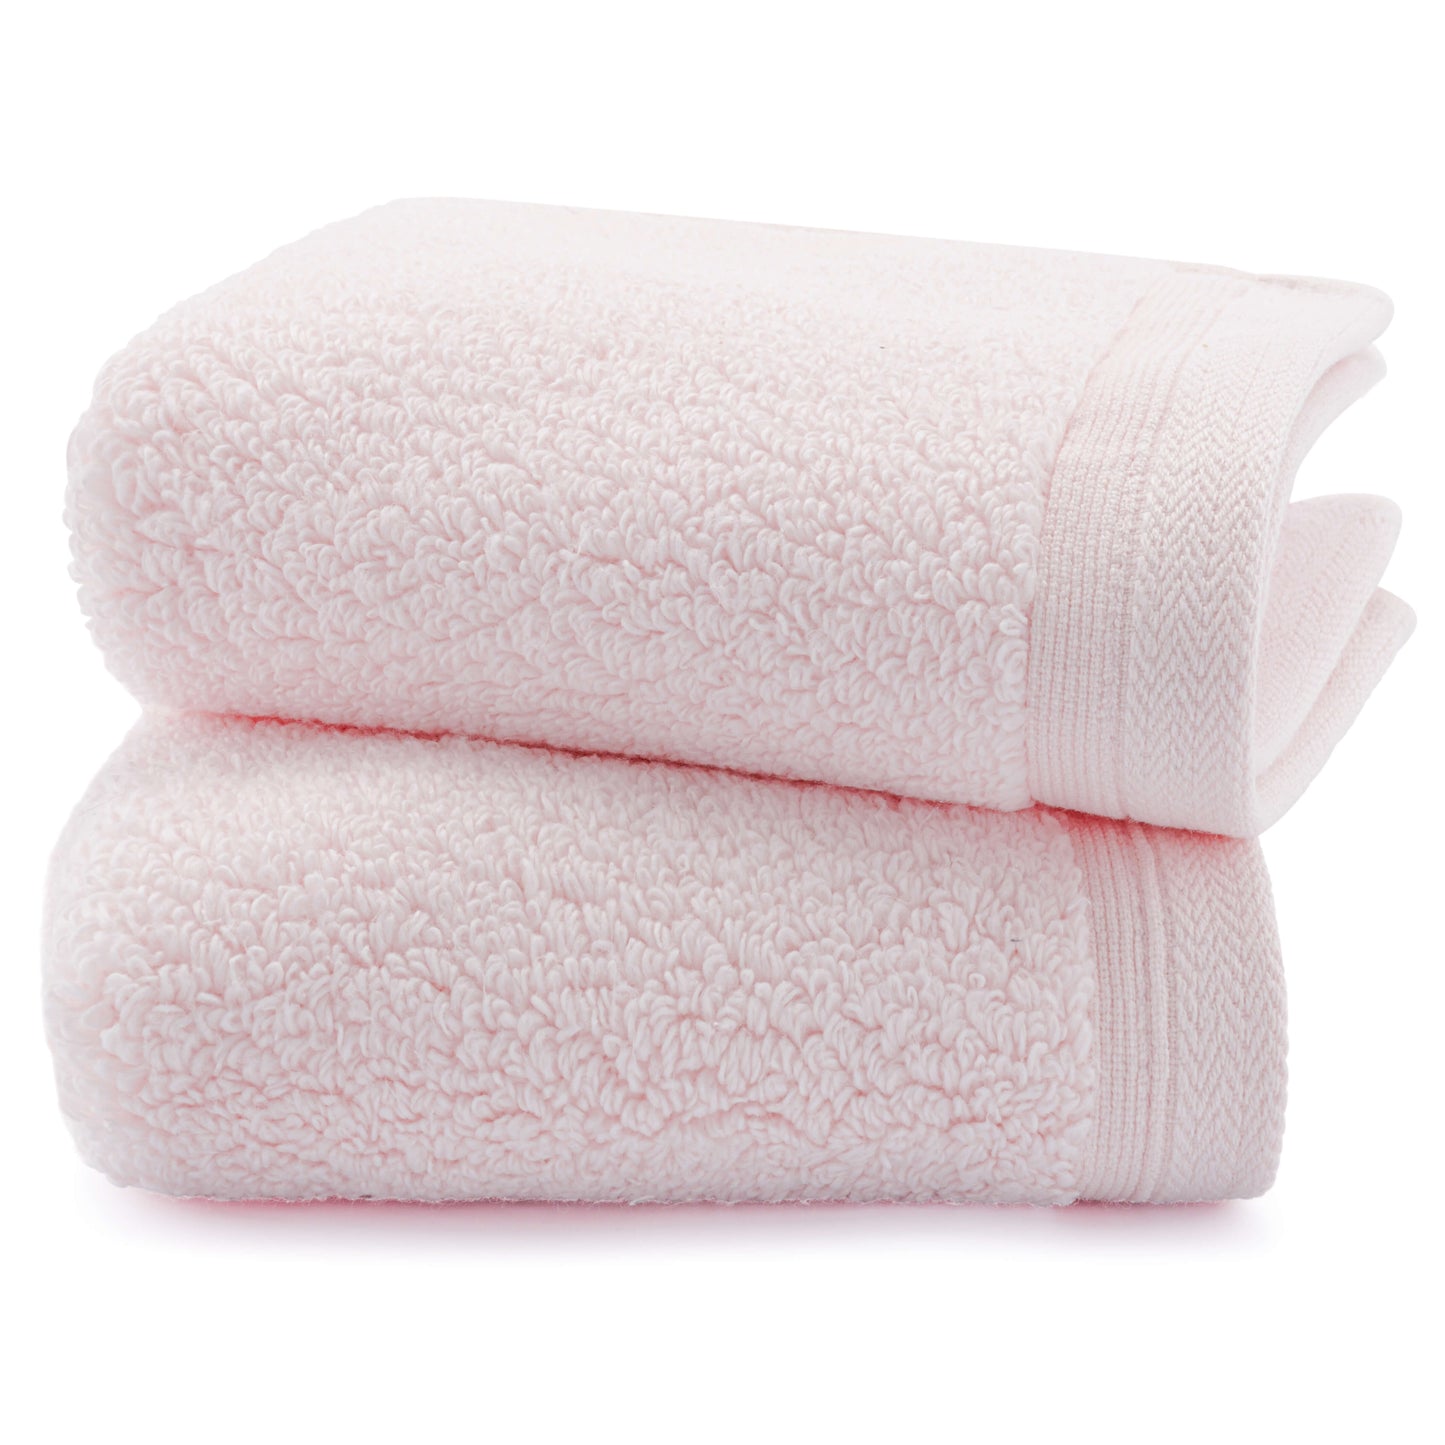 Egyptian Cotton Luxury Serenity Palace Plush Towel - Blush Pink - 700GSM Zero Twist